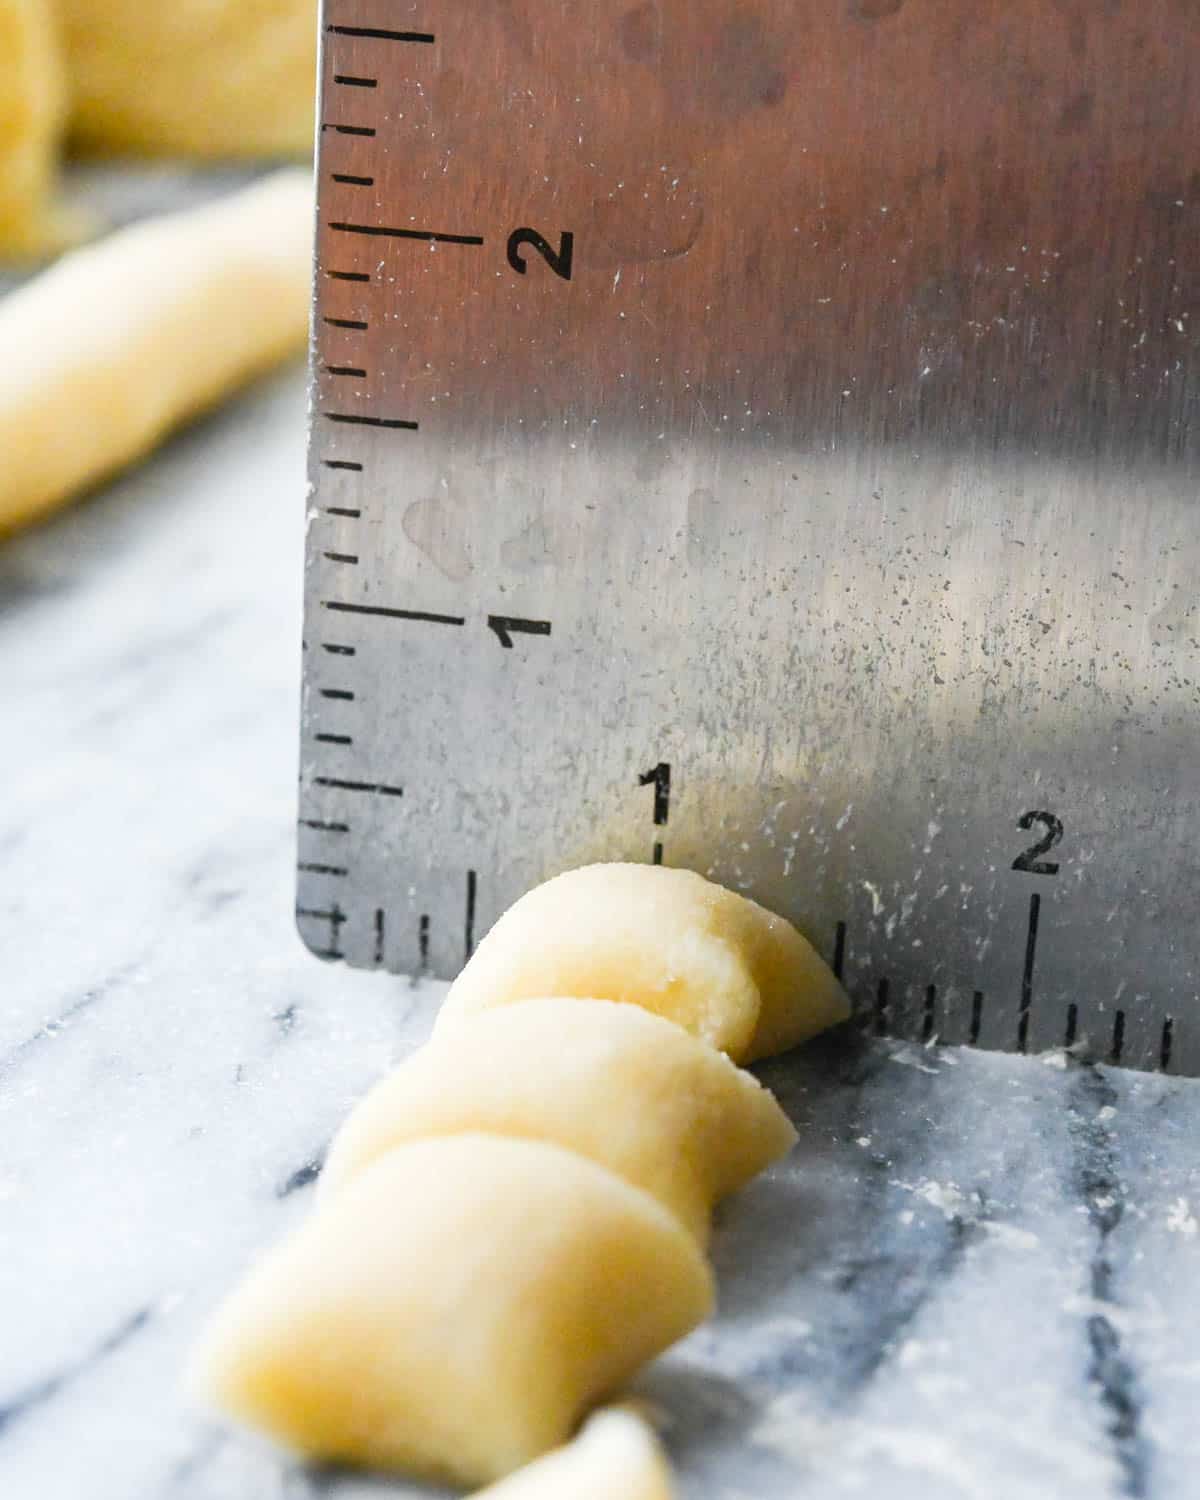 I am using a dough scraper to cut 1" bites of homemade gnocchi.